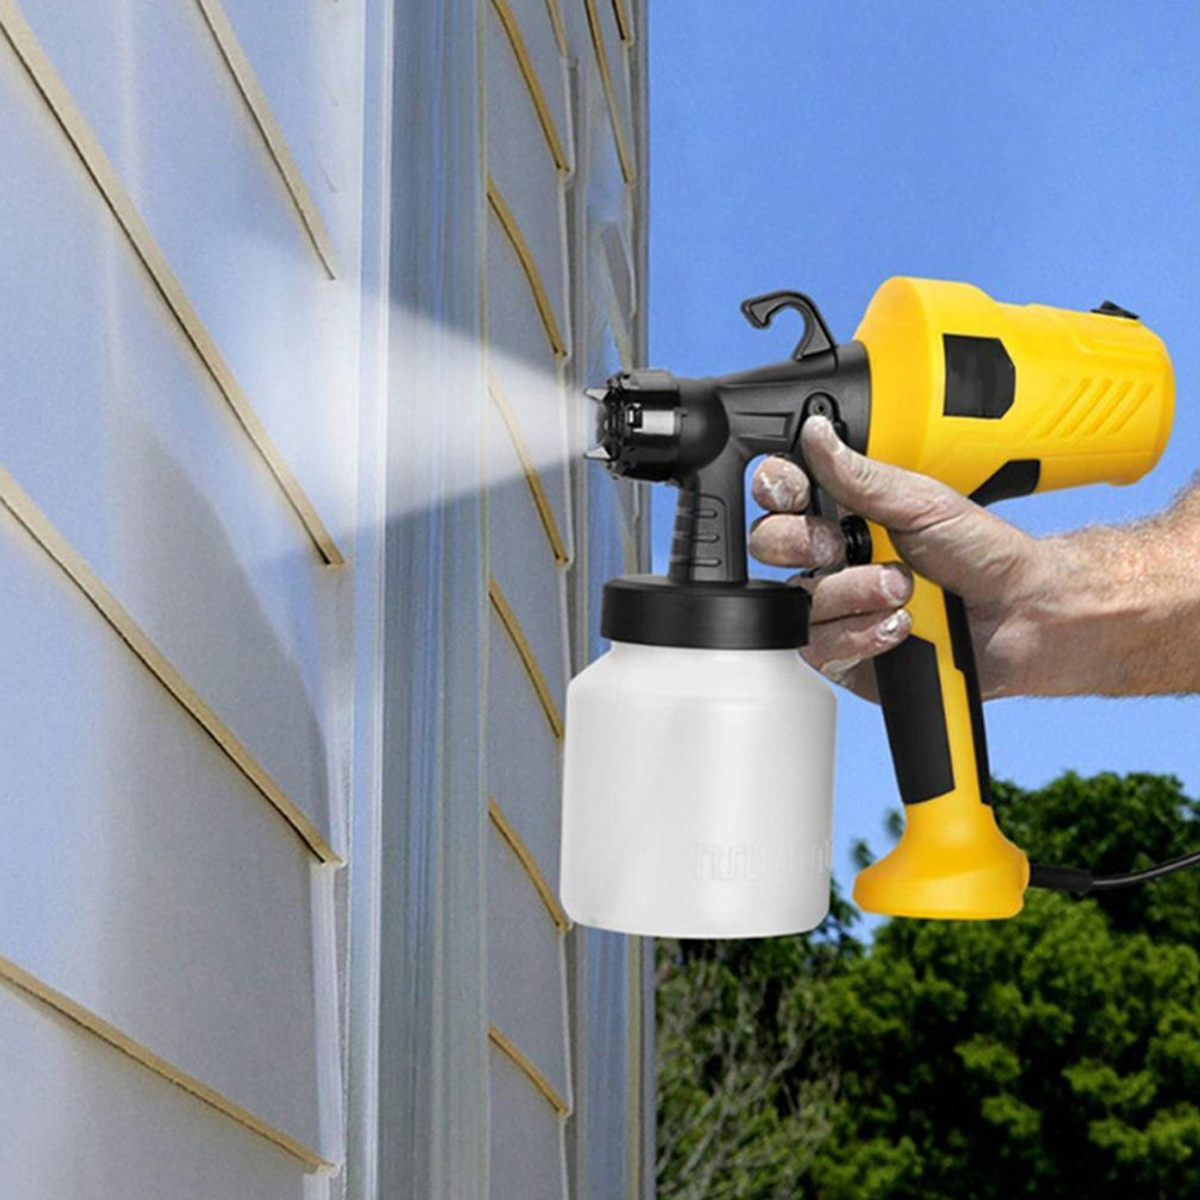 800ml-Electric-Paint-Spray-Guns-Disinfectant-Sprayer-Household-Portable-Disinfecting-Spray-DIY-Paint-1866548-5